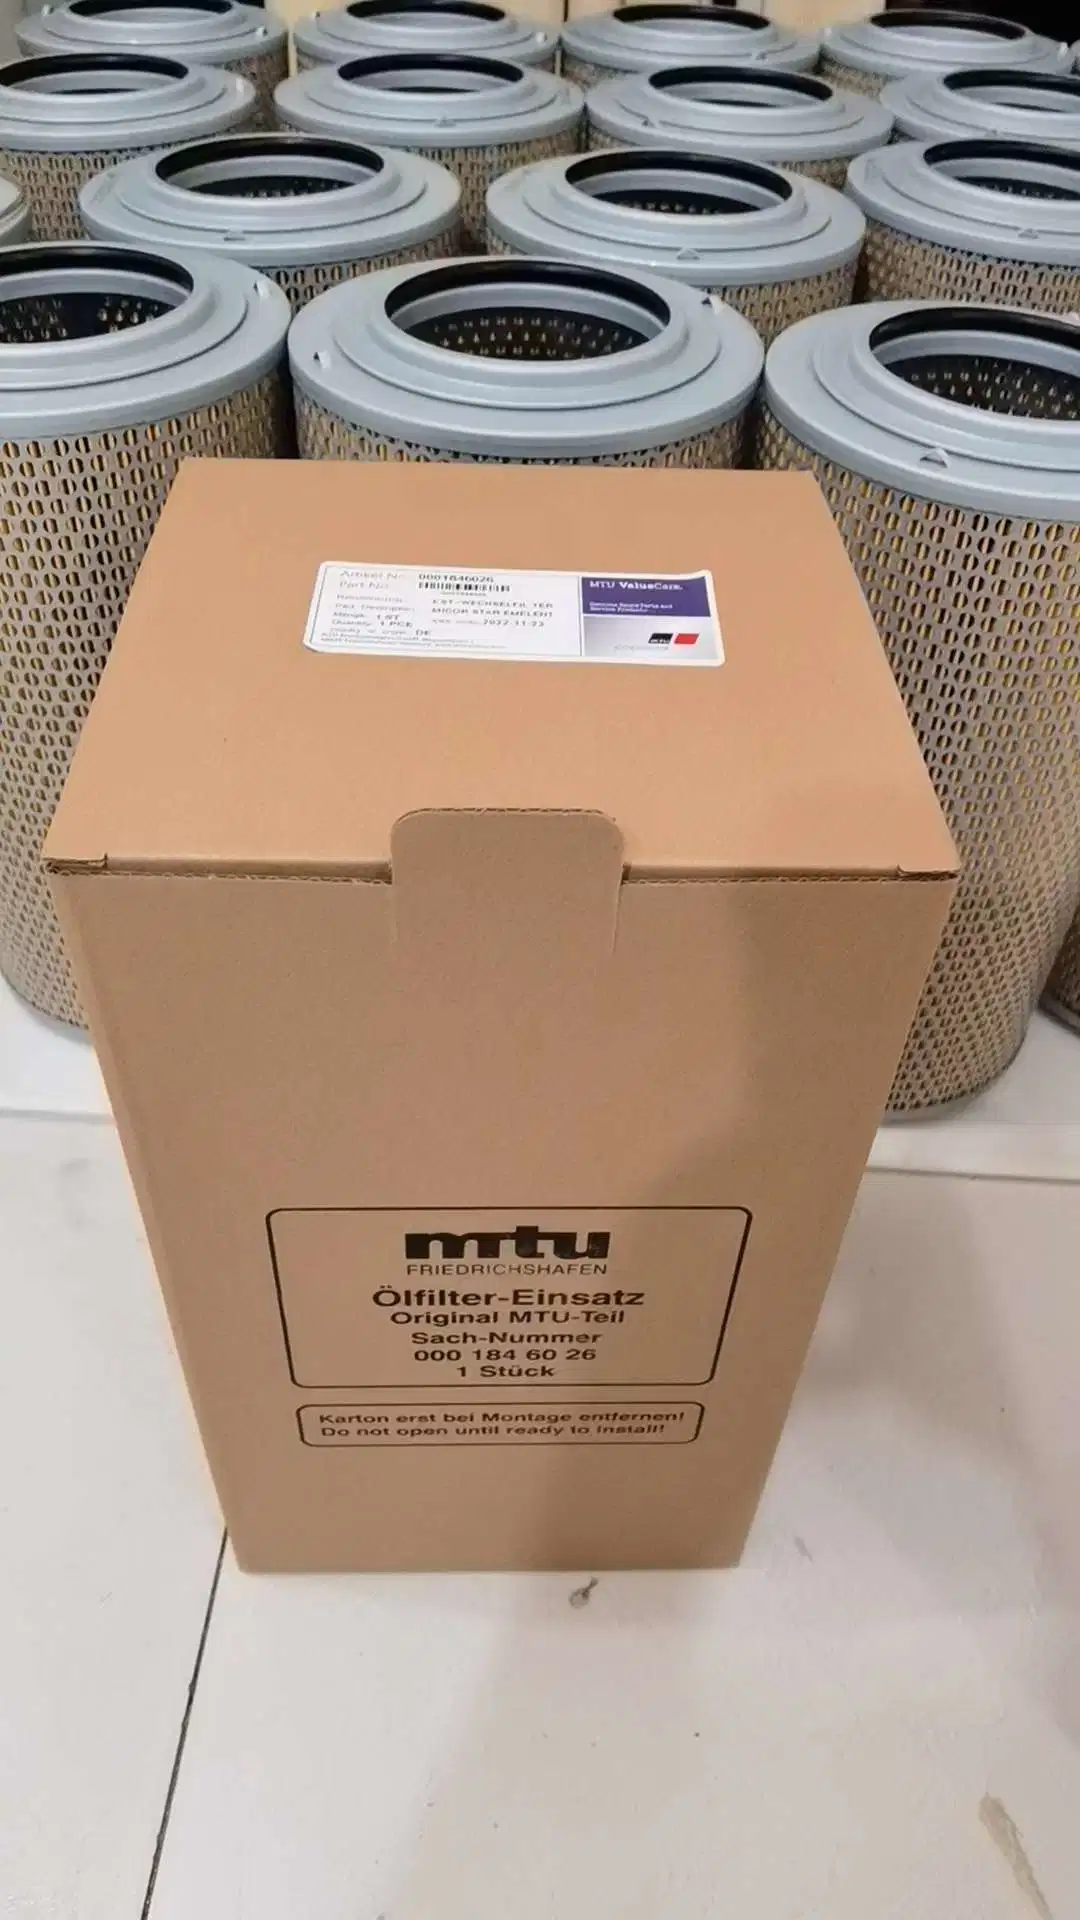 Mtu 956 Engine Parts Air Filters (0001846026)